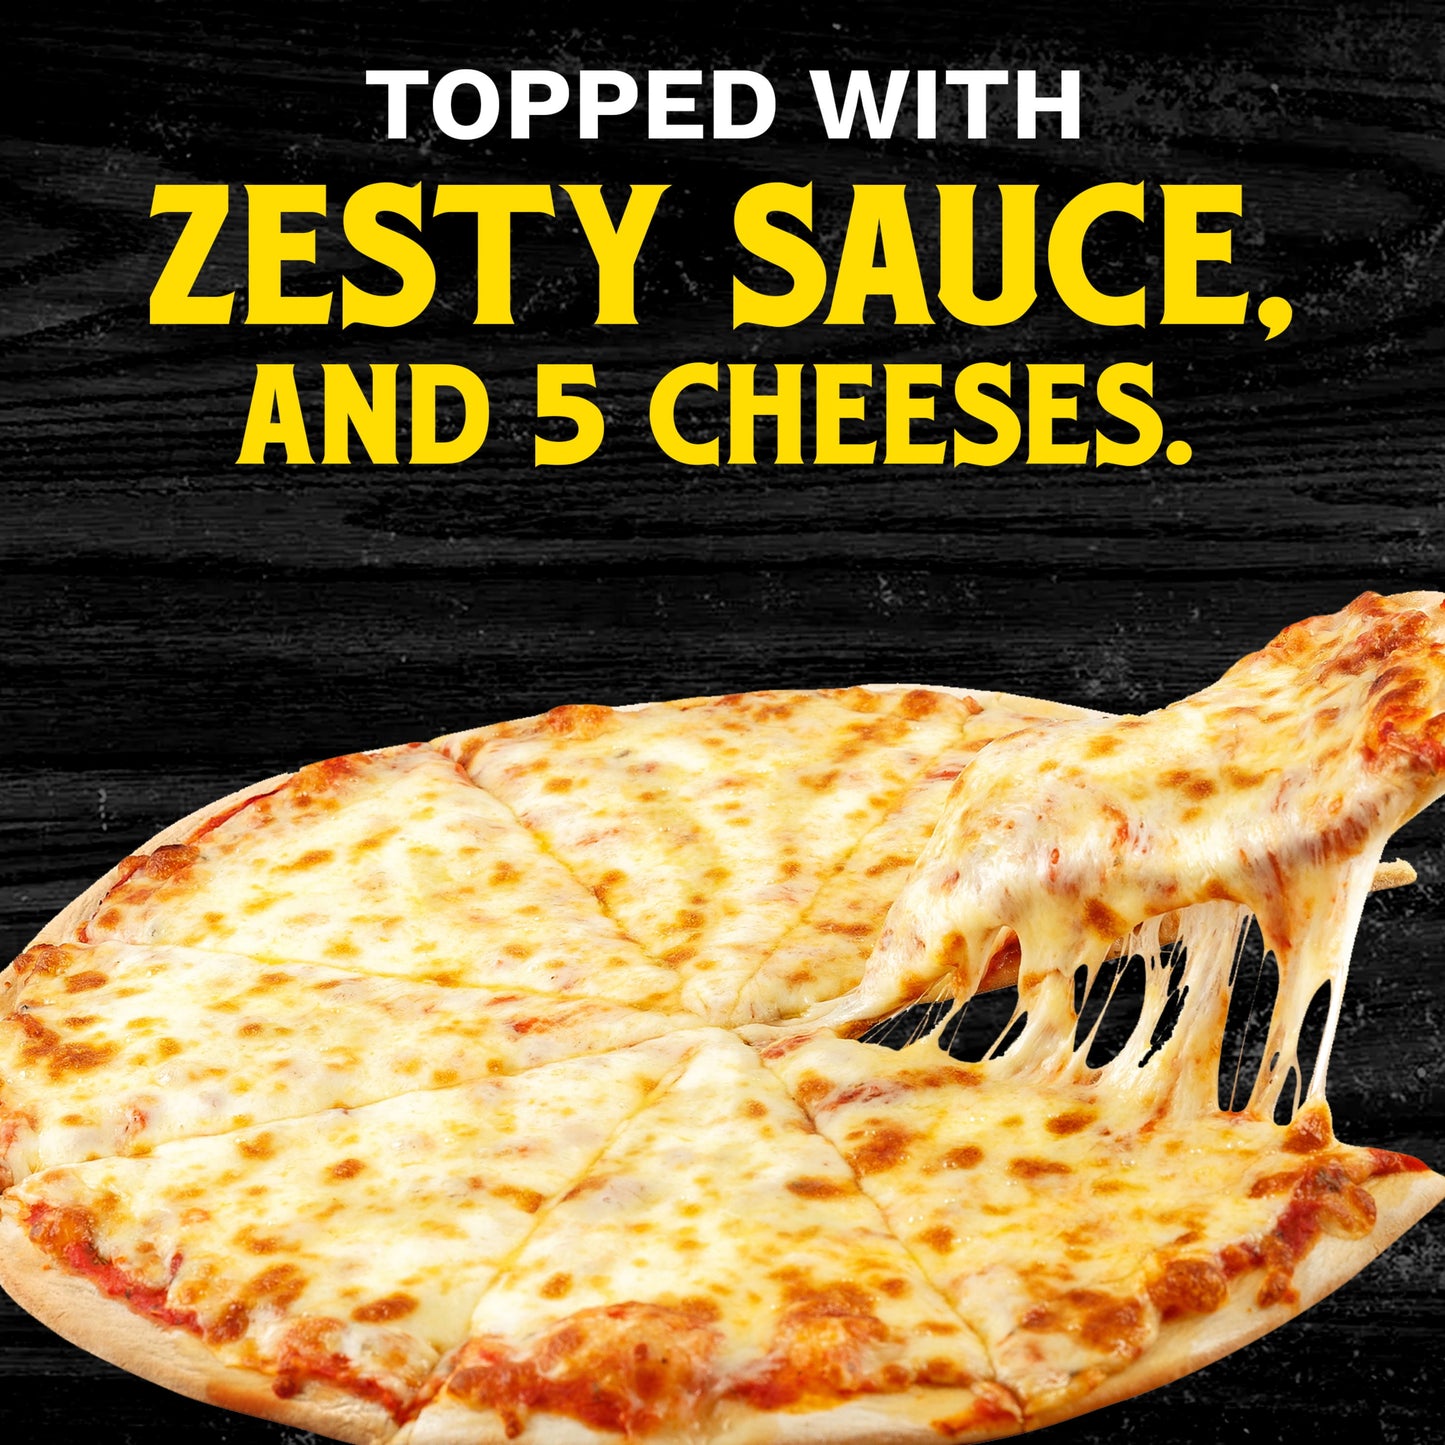 Tombstone Frozen Pizza, Five Cheese  Thin Crust, Pizza with Marinara Sauce, 19.3 oz (Frozen)